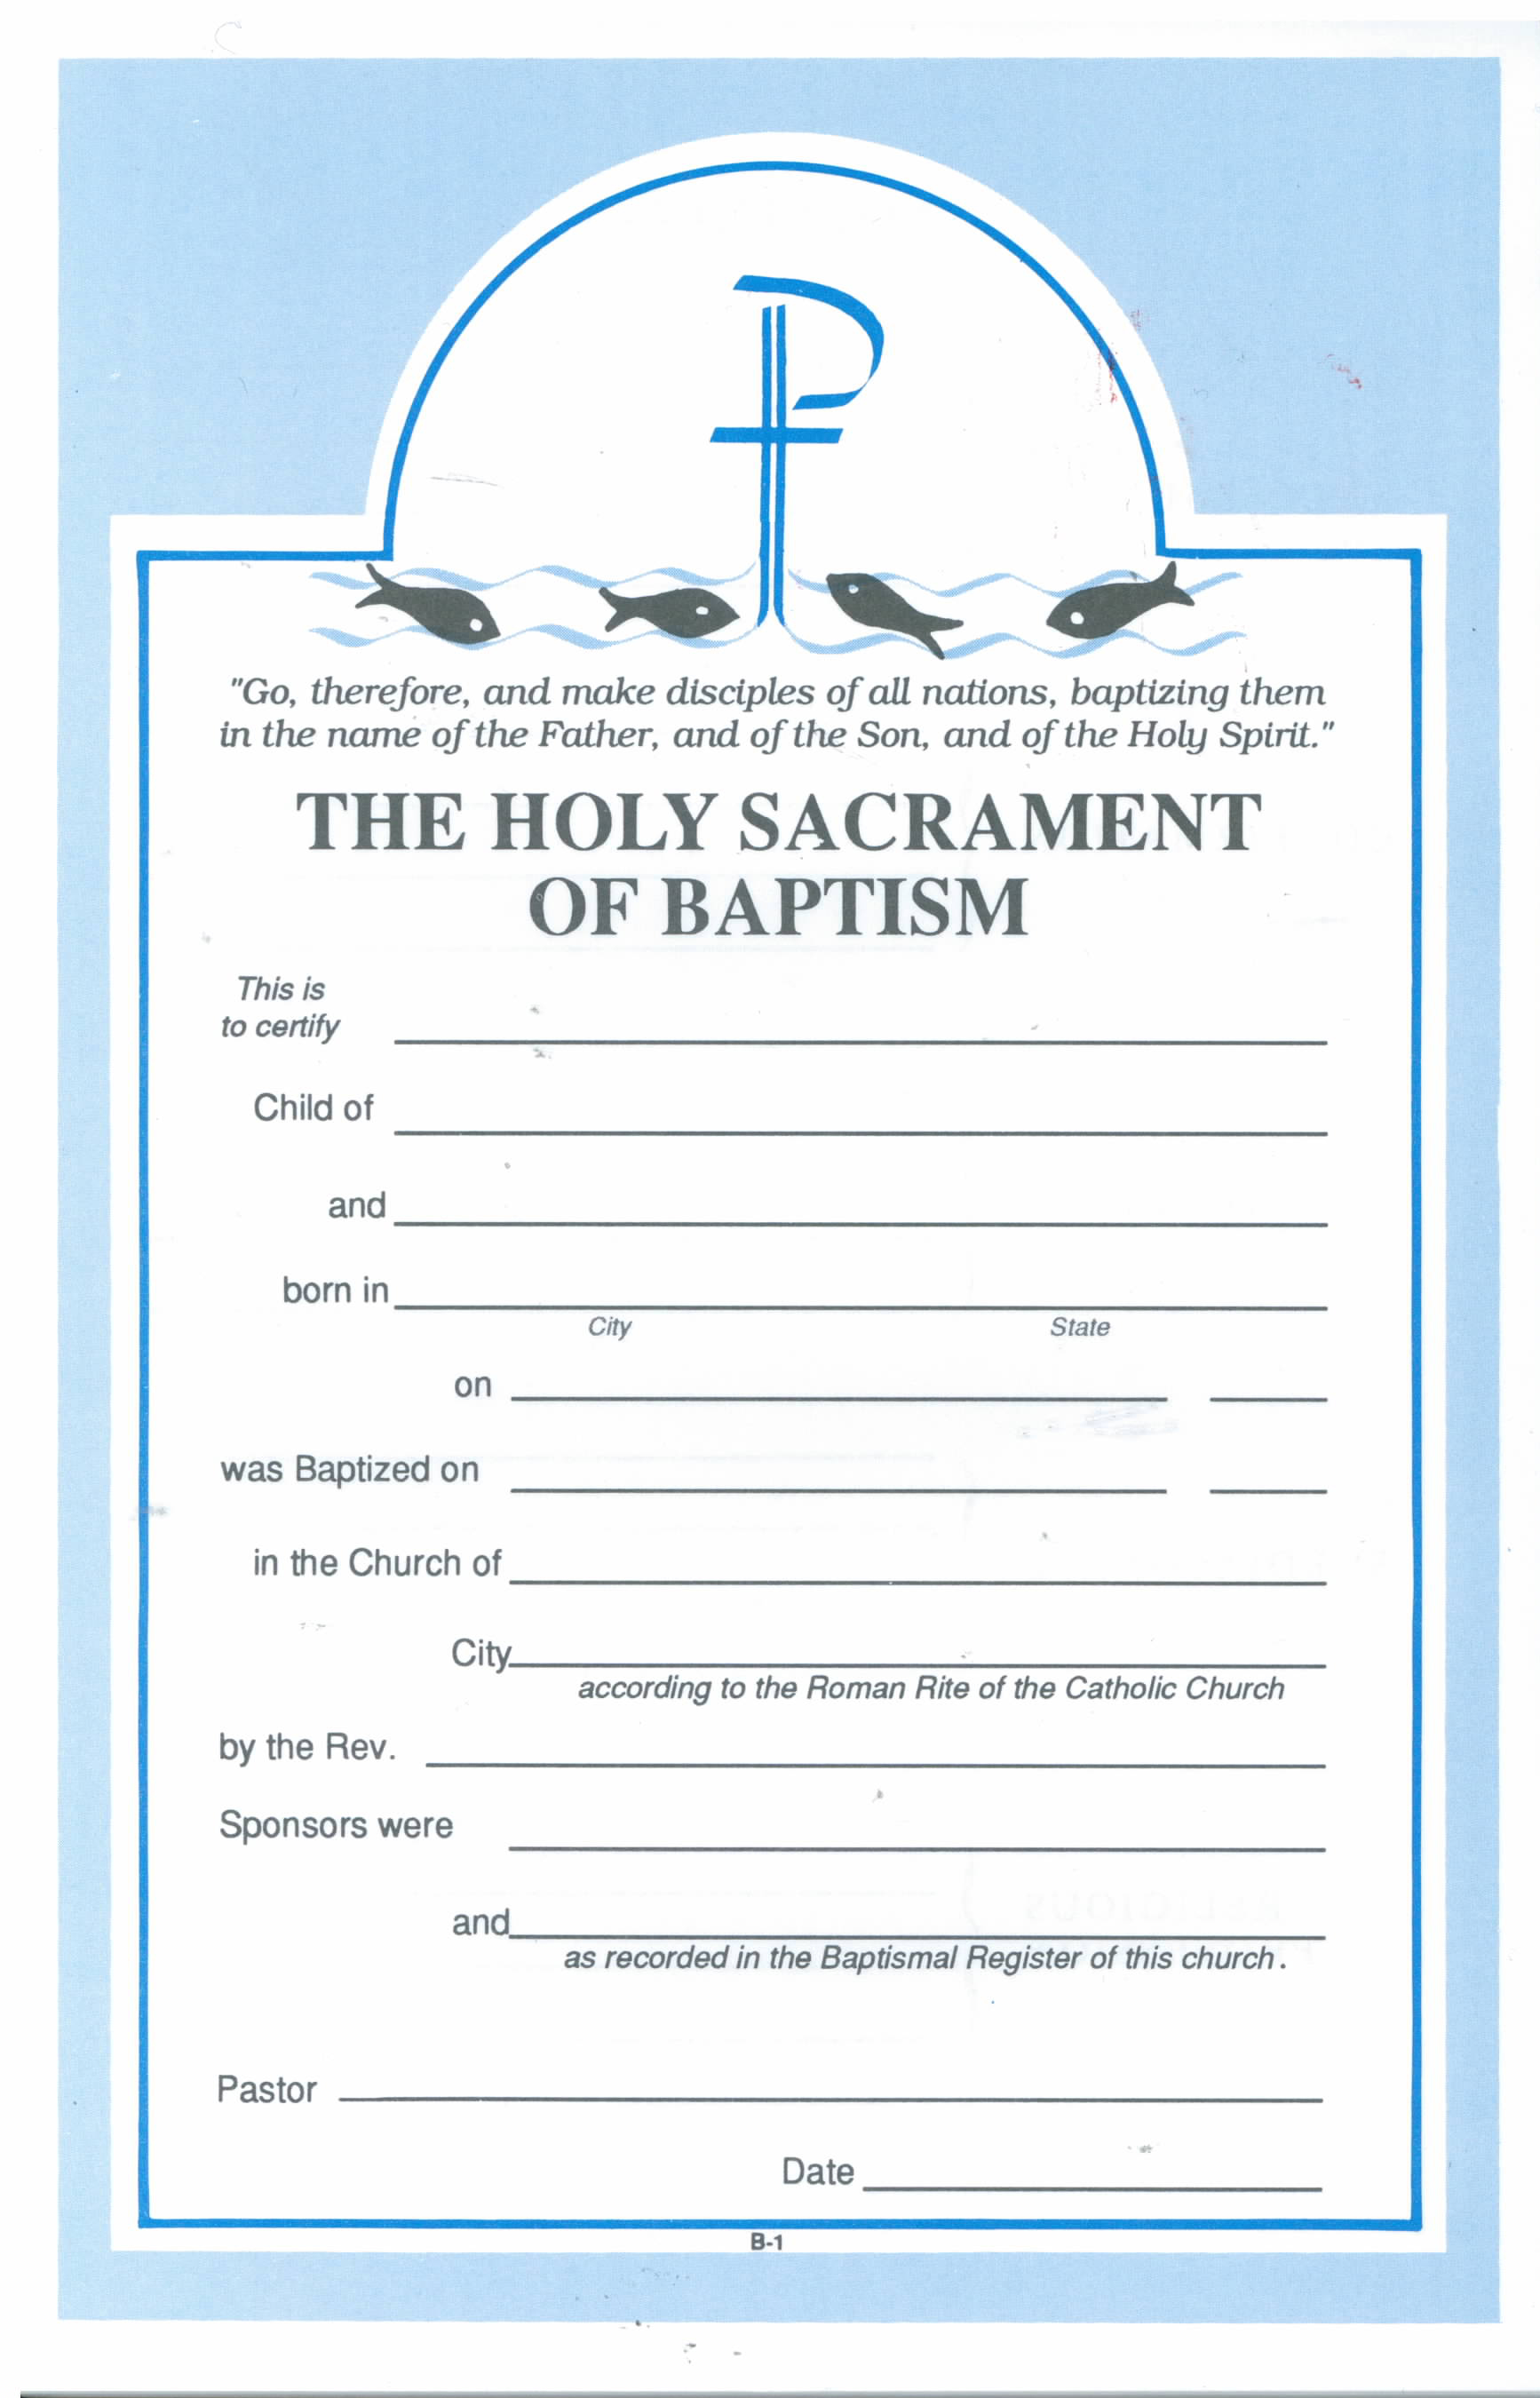 Holy Sacrament Of Baptism Certificate 50 per pad 8-RUB11734 x 2700